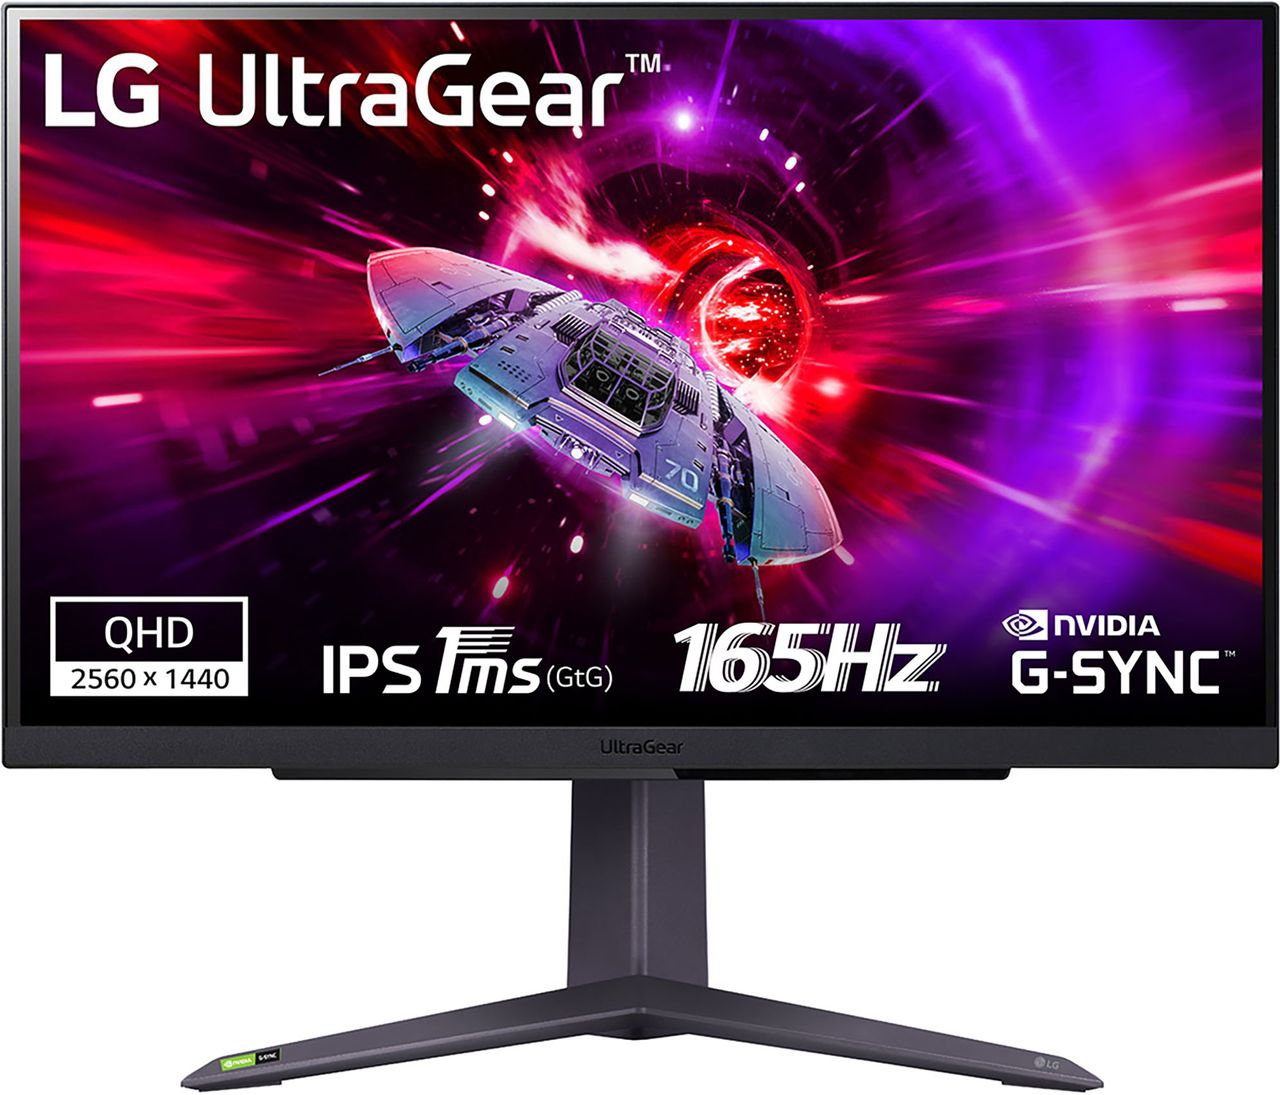 LG Monitor para Gaming UltraGear™ QHD de 27'' de LG con 1ms, 144Hz